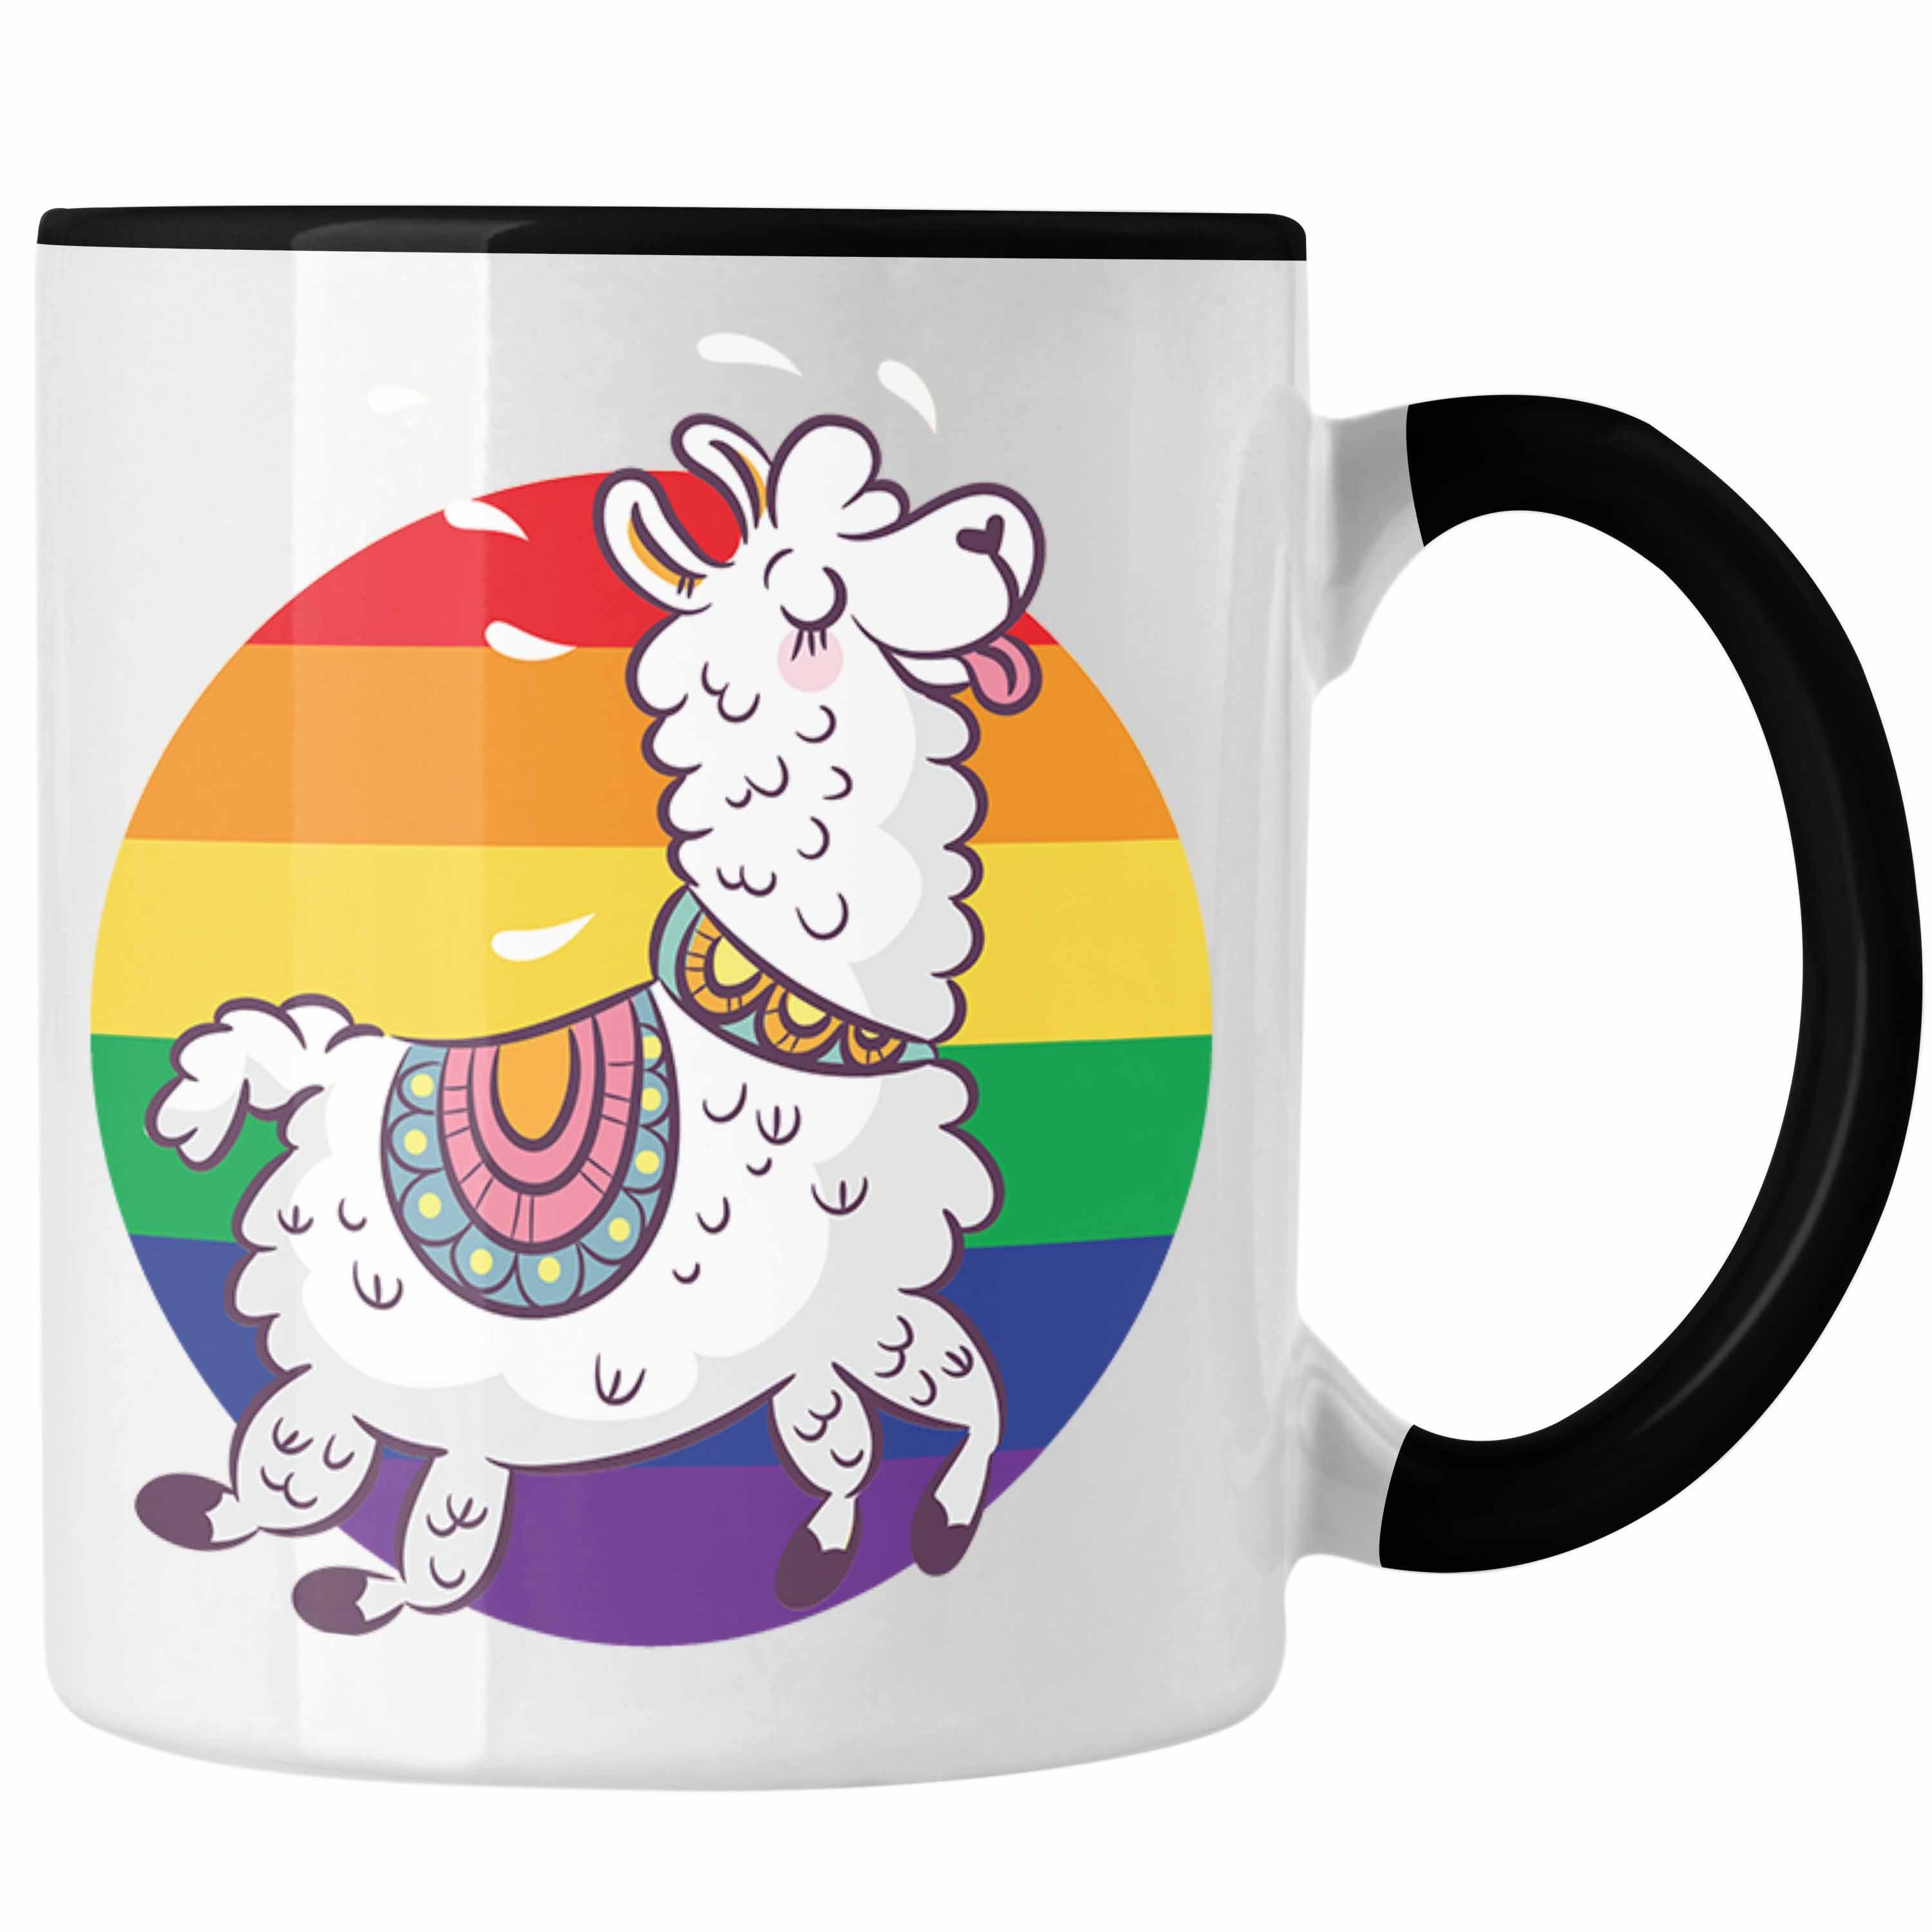 Trendation Tasse Trendation - Regenbogen Tasse Geschenk LGBT Schwule Lesben Transgender Grafik Pride Tolles Llama Schwarz